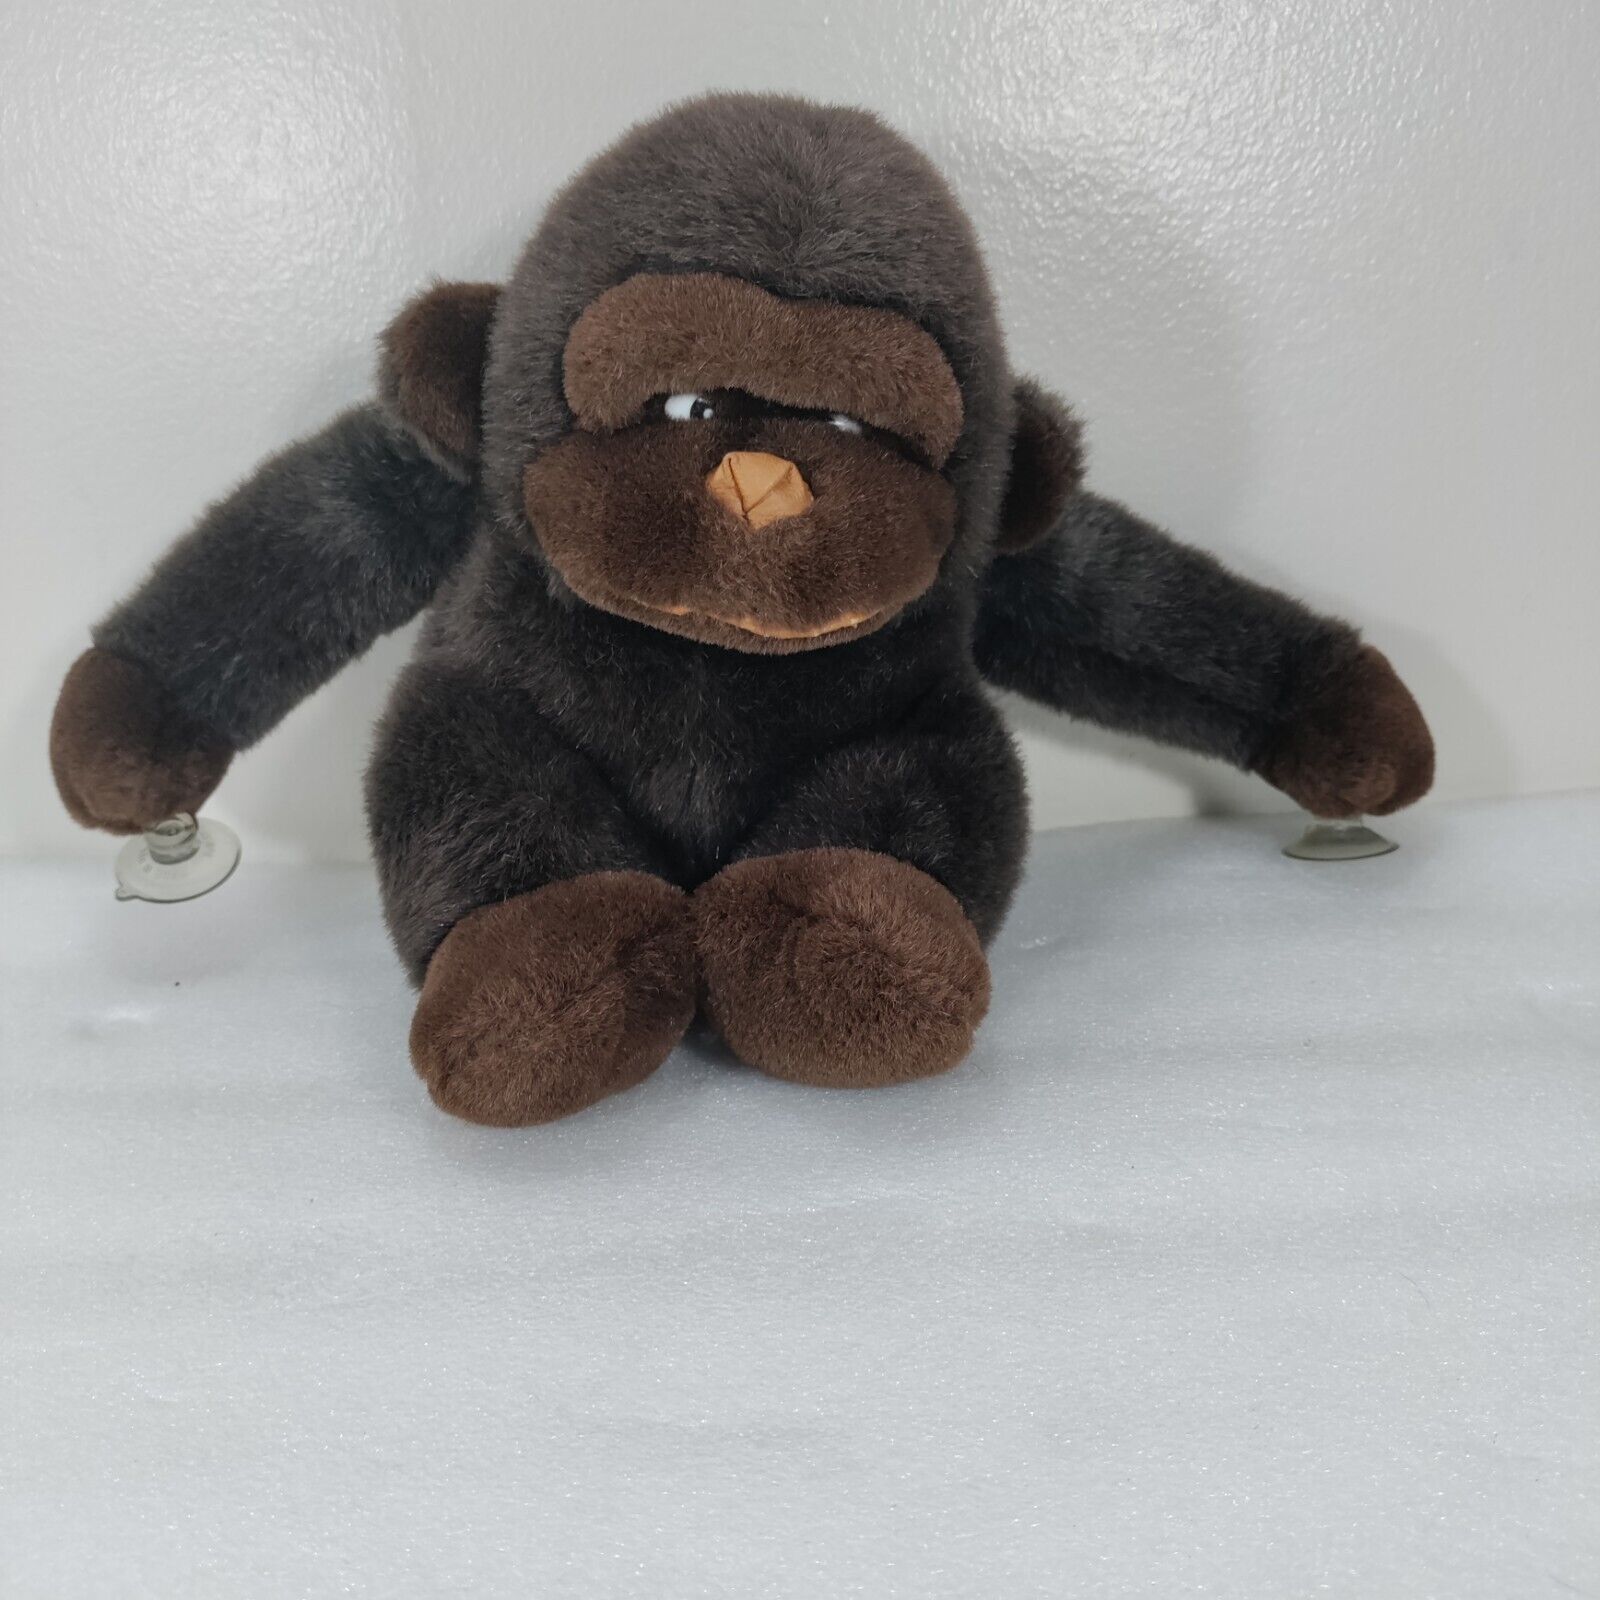 Plush Gorilla 1987 Vtg Brown Black Made in Korea Stuffed Animal 12\